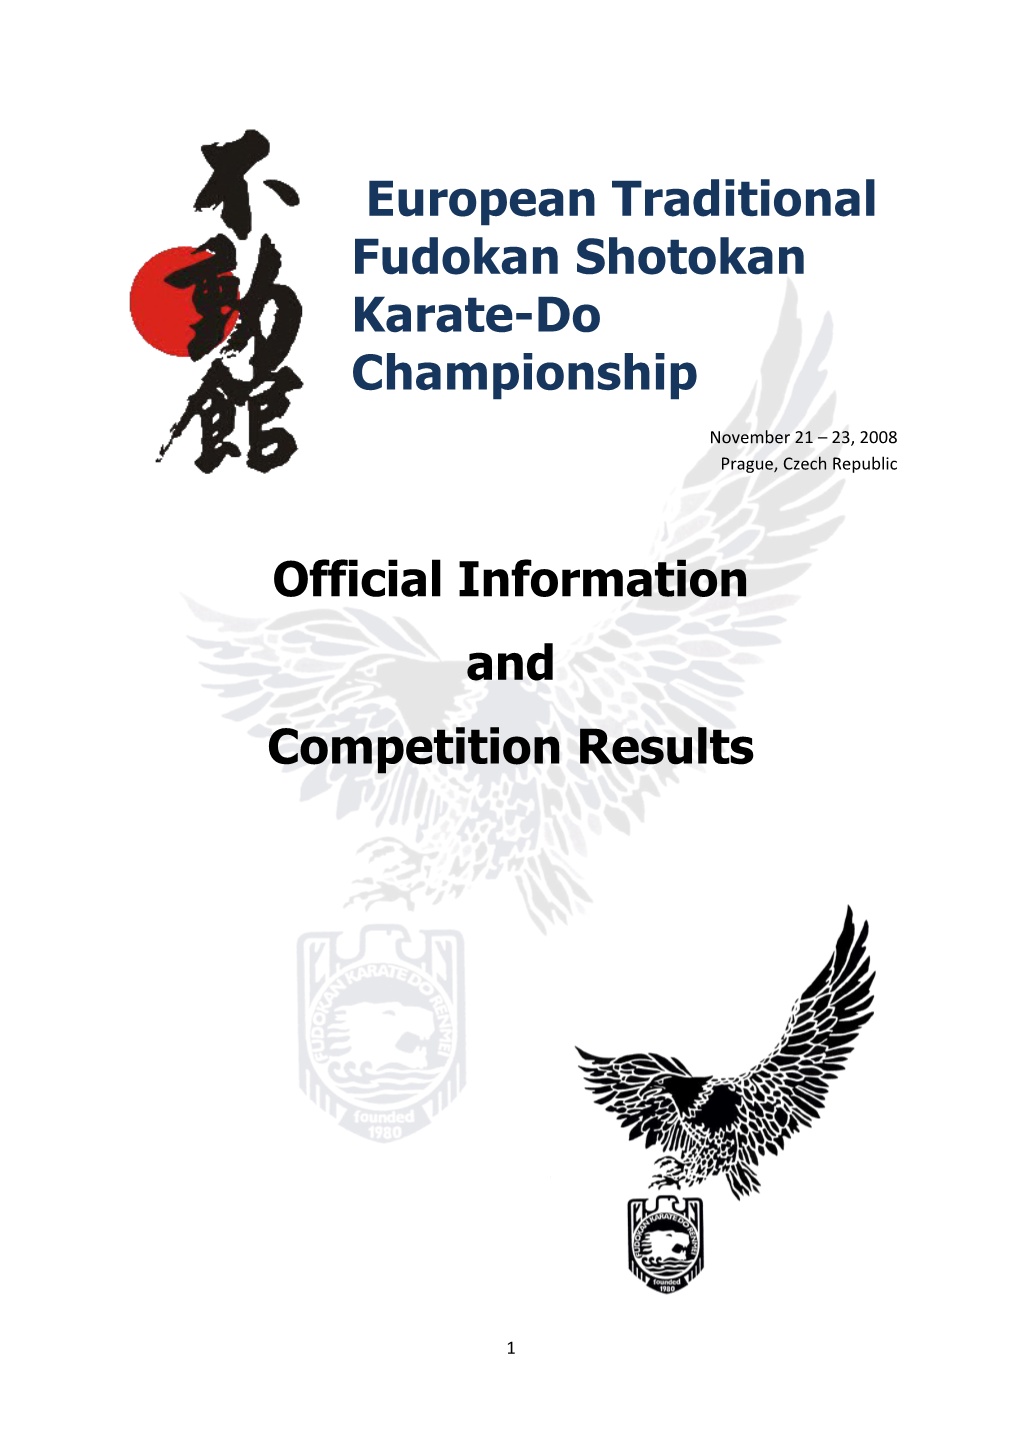 European Traditional Fudokan Shotokan Karate-Do Championship